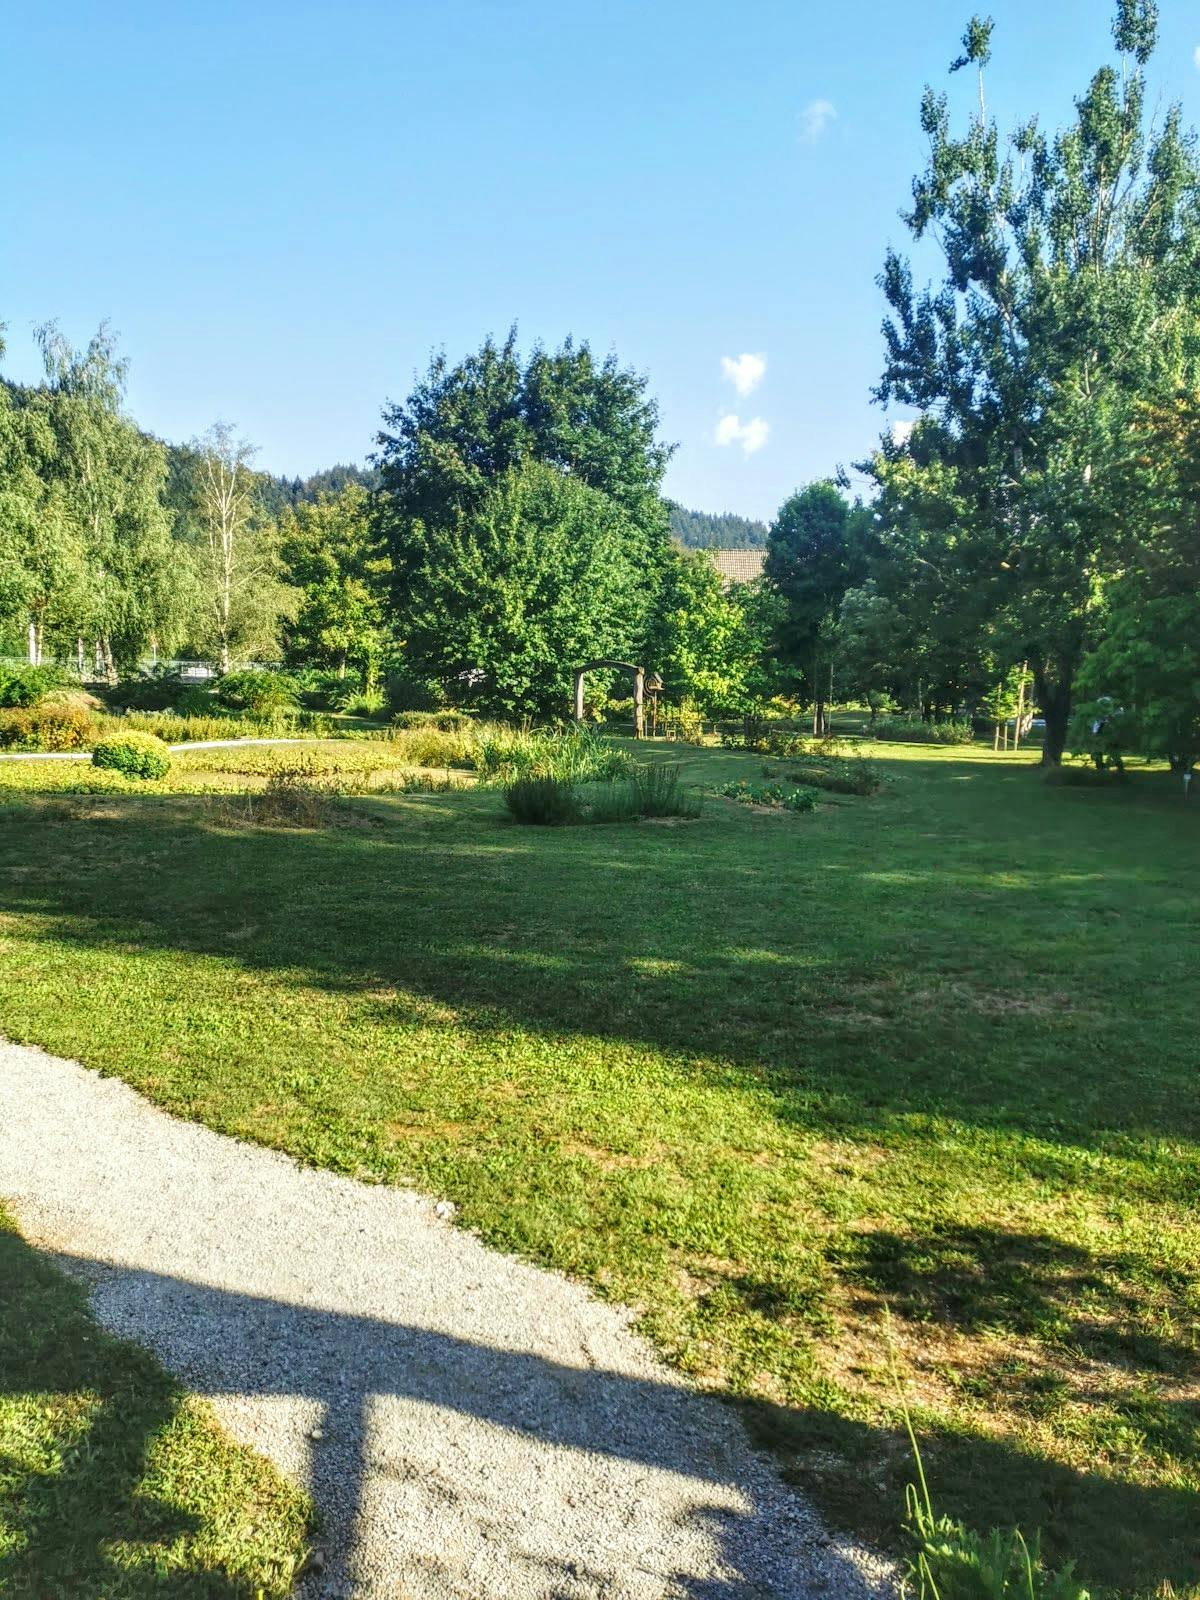 EDEN, Žiri, Slovenia